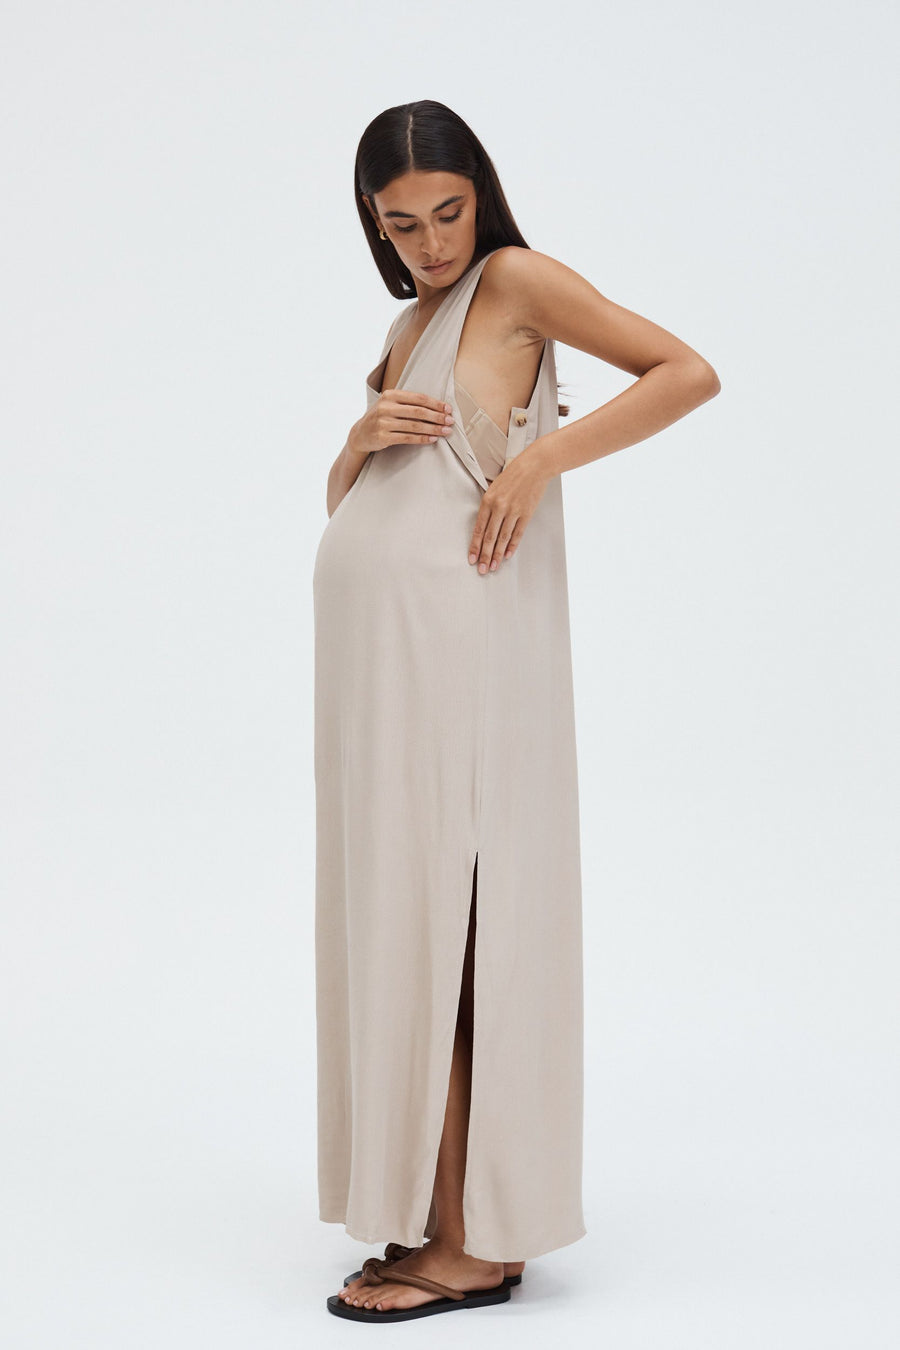 Stylish Baby Shower Dress (Neutral) 7